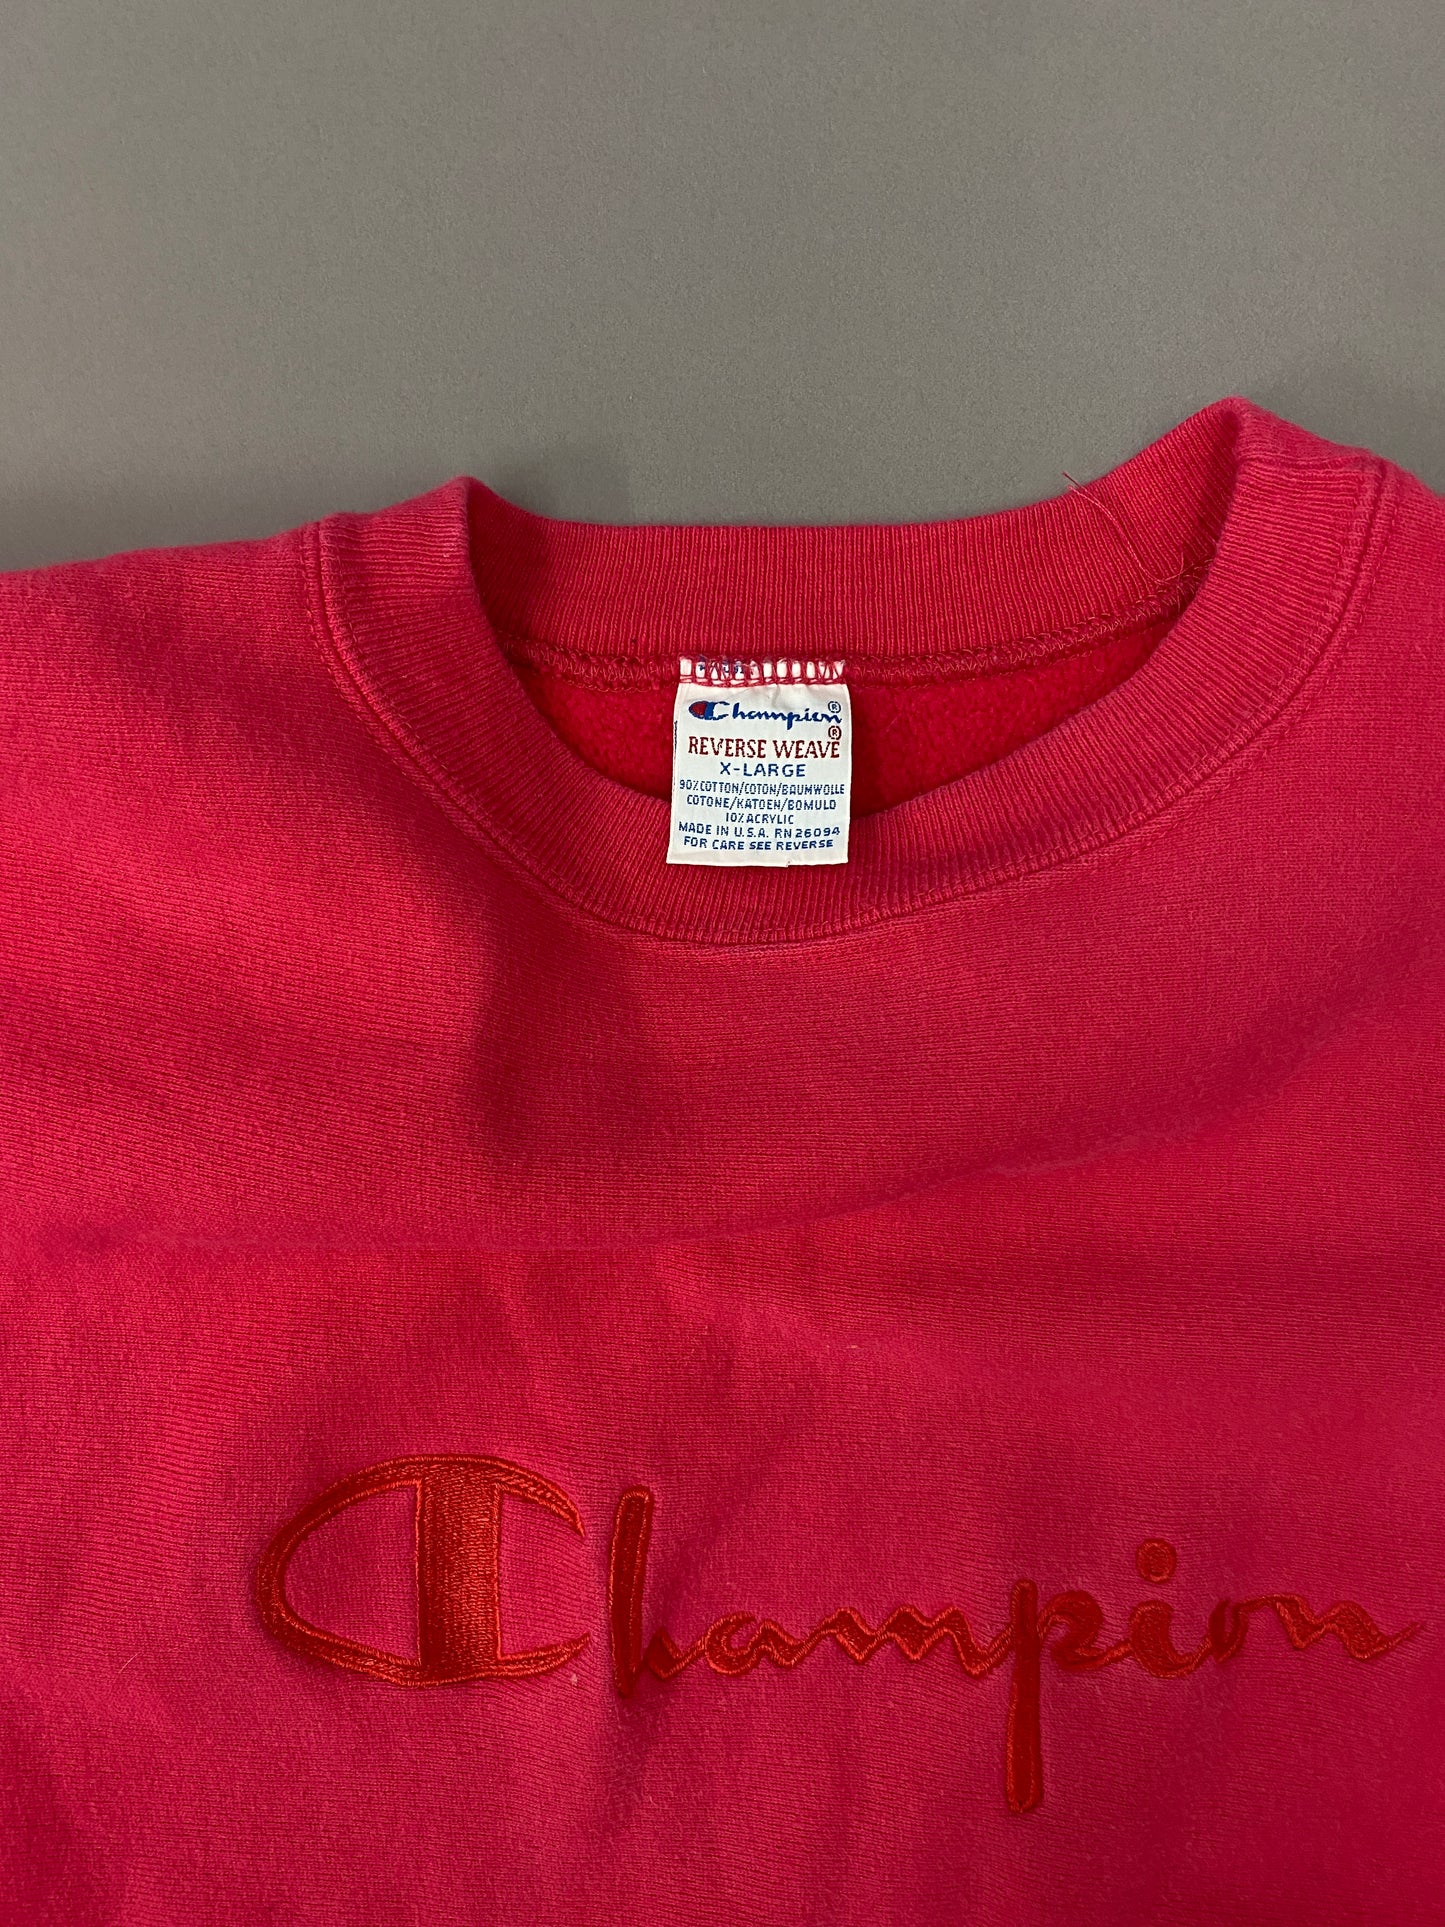 Champion 90's sweatshirt